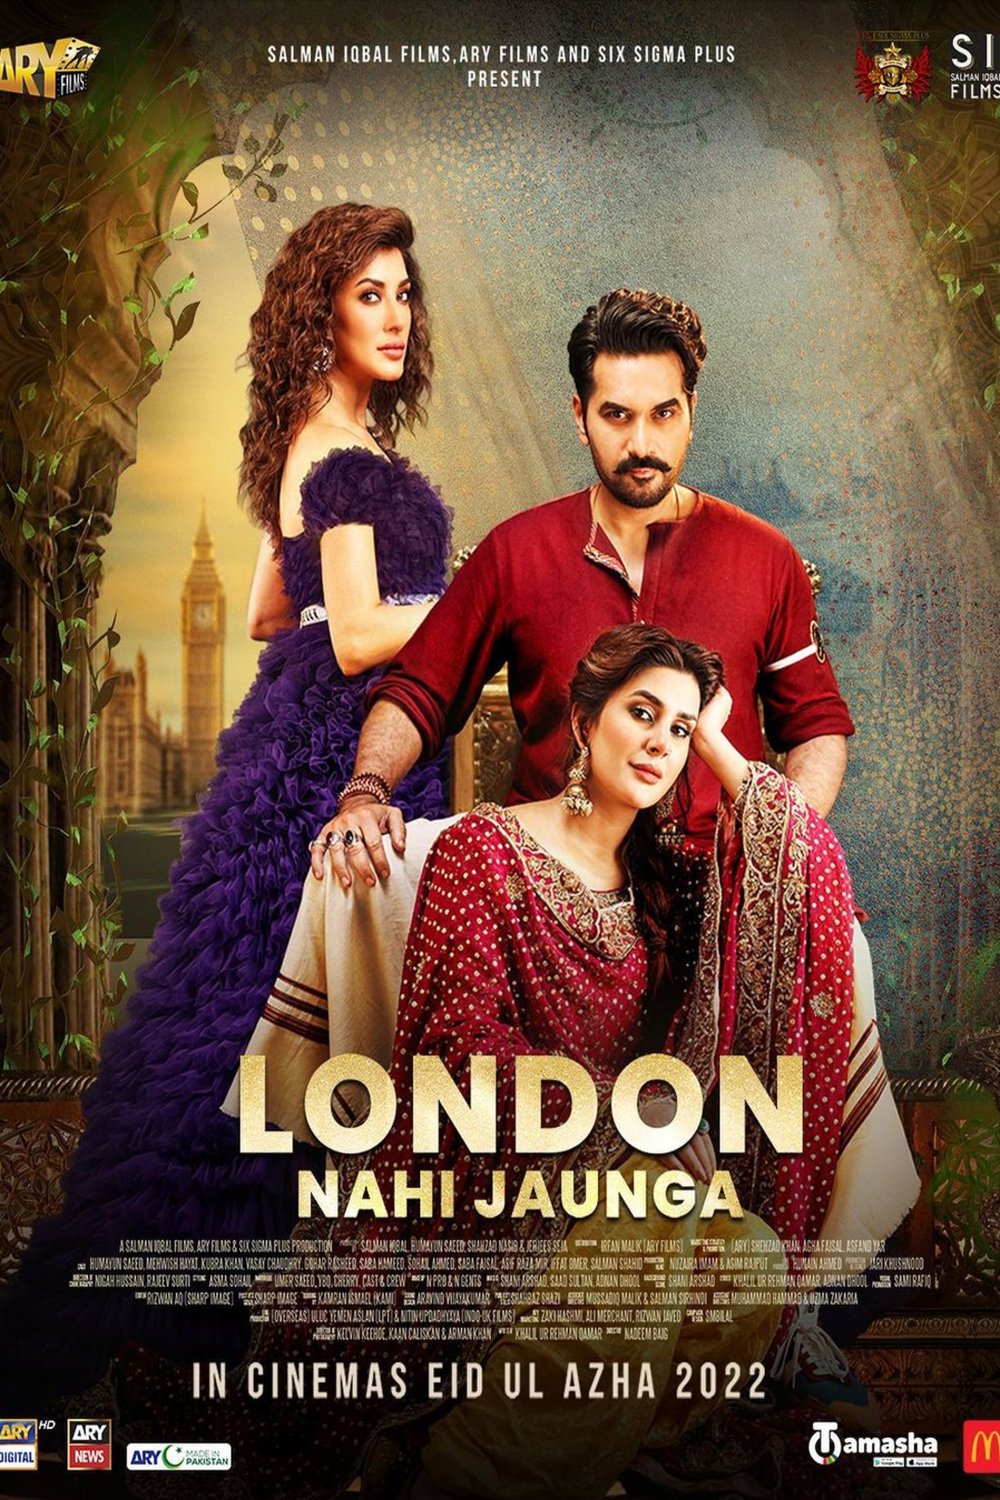 Urdu poster of the movie London Nahi Jaunga